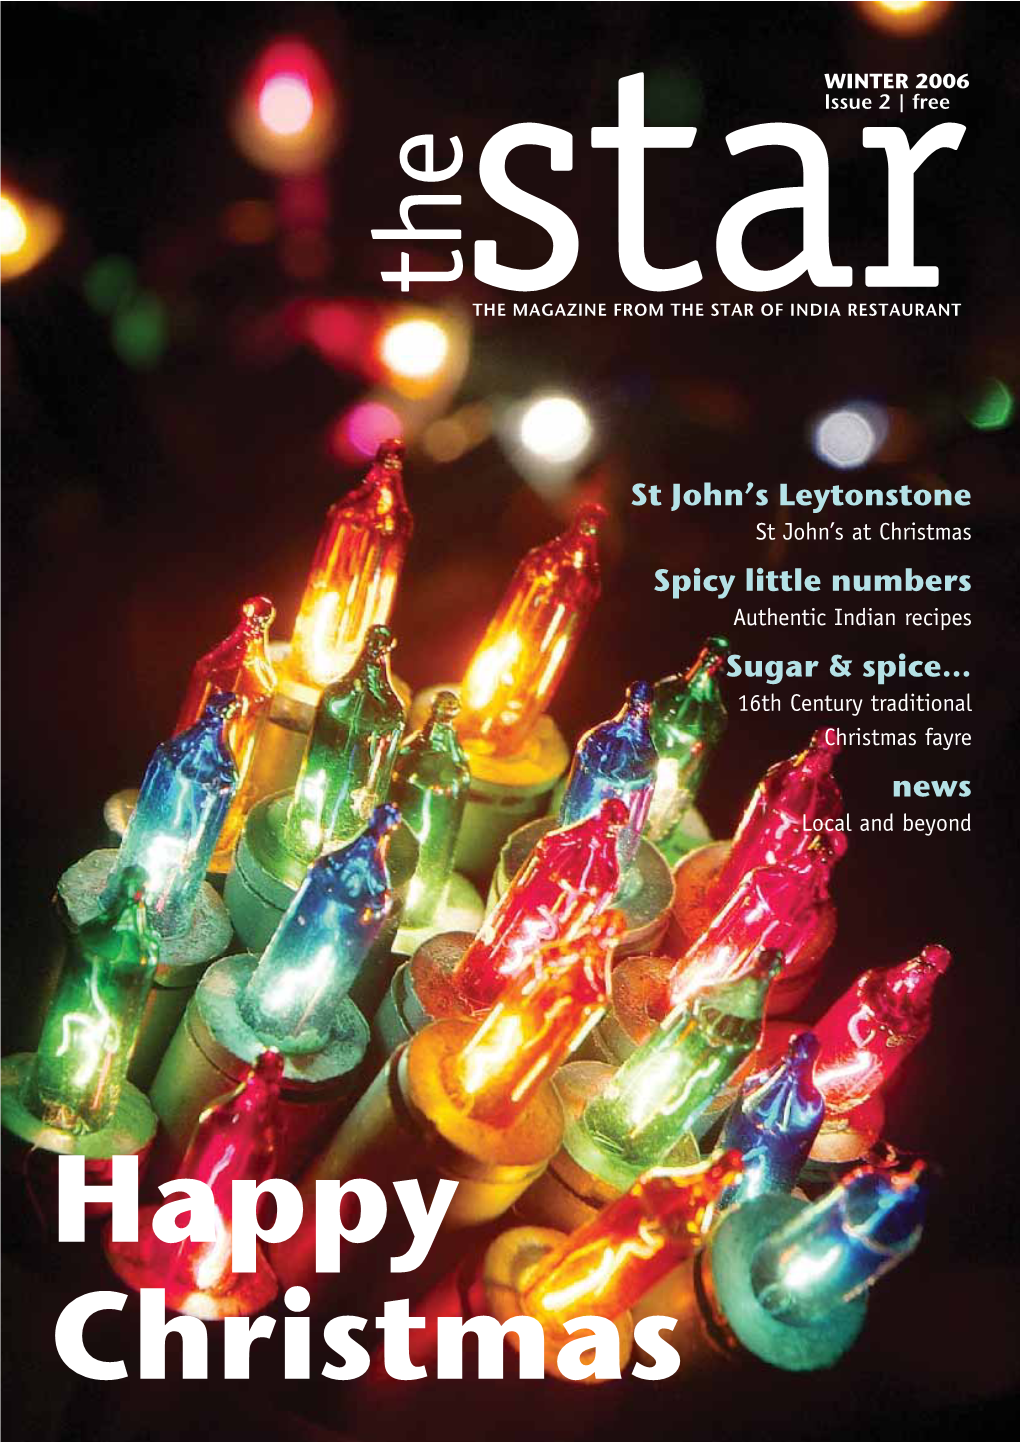 The Star Magazine, 875 High Road, Leytonstone, London E11 1HR